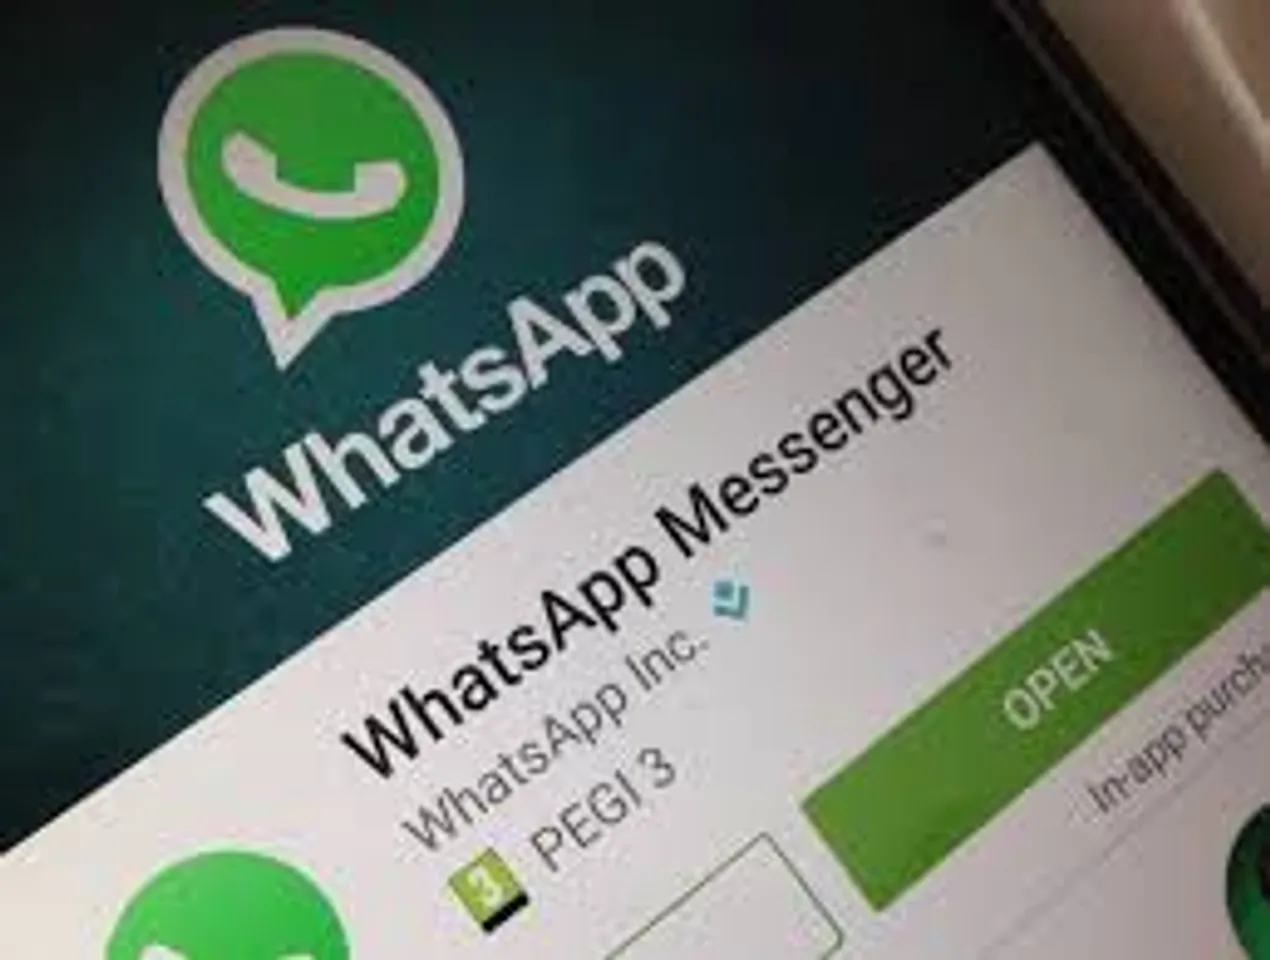 Brazil banned WhatsApp temporarily